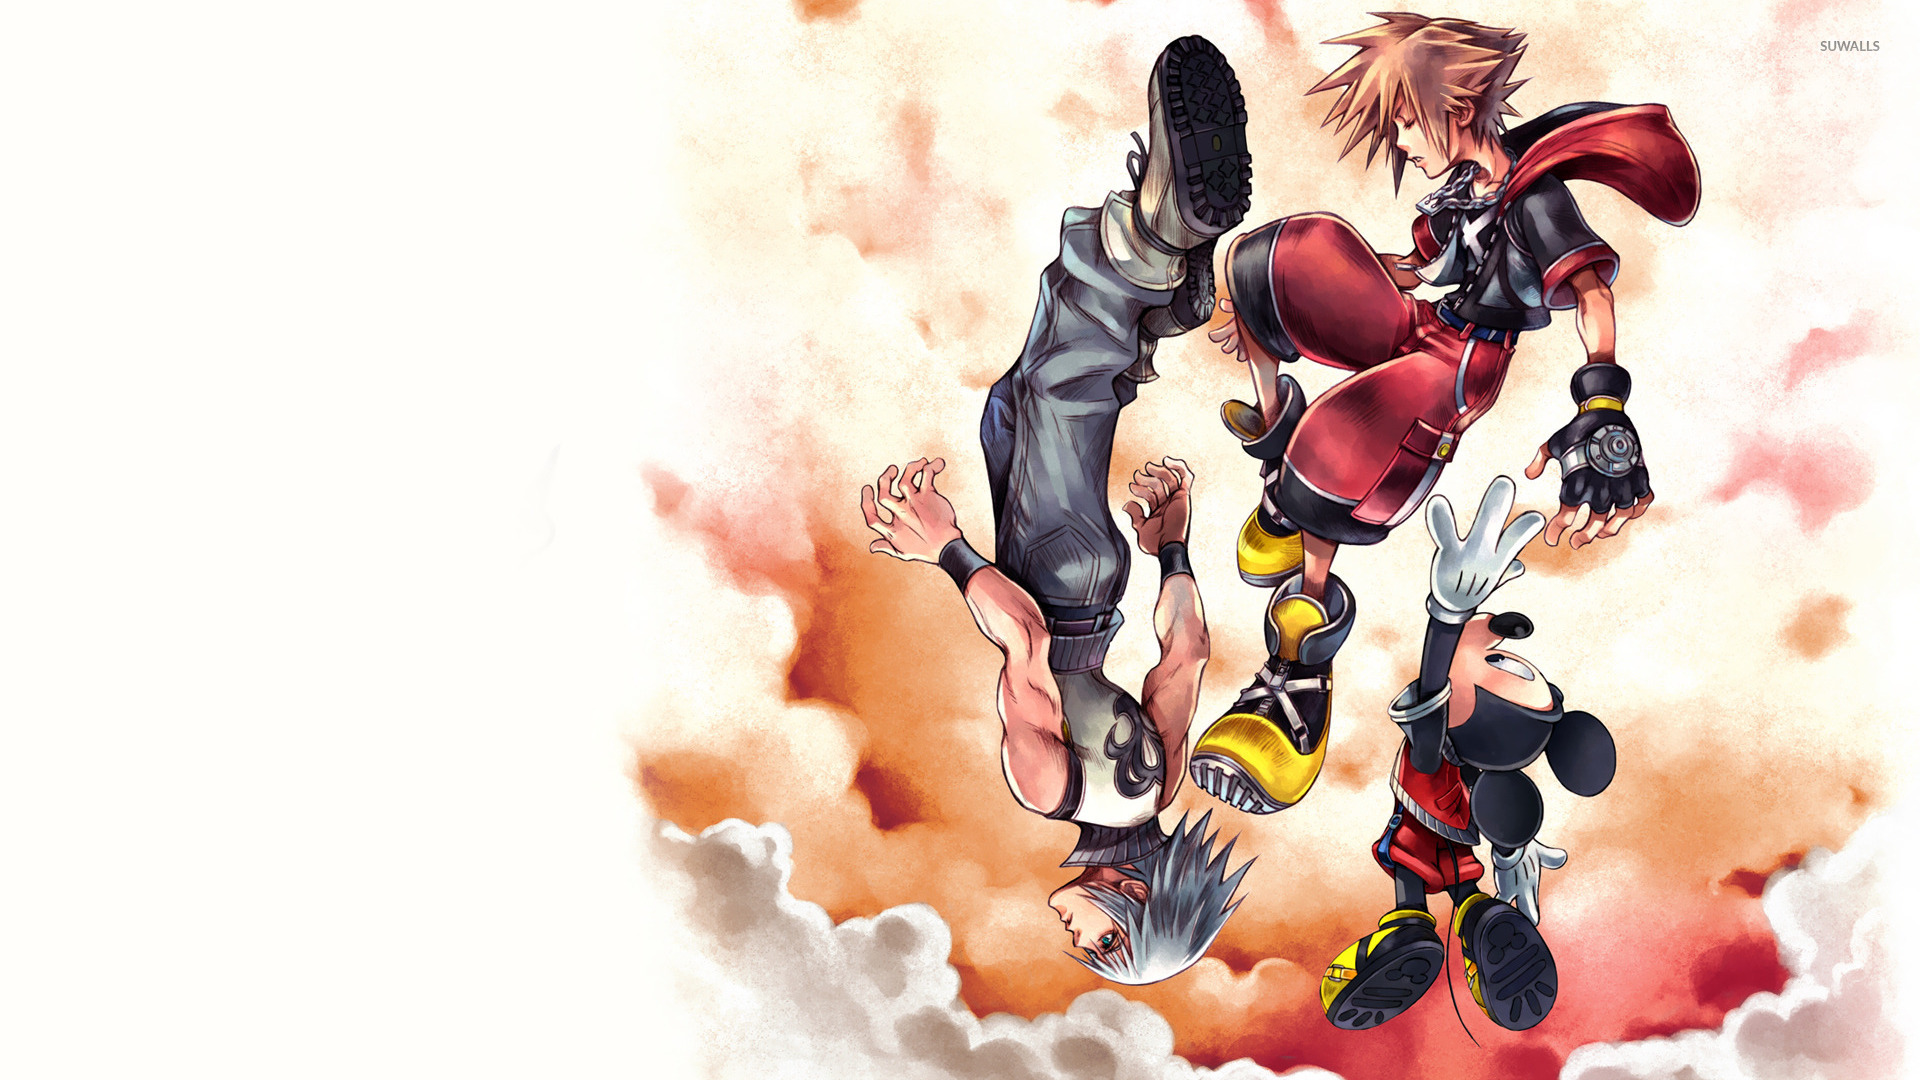 Kingdom Hearts Iii Wallpaper Game